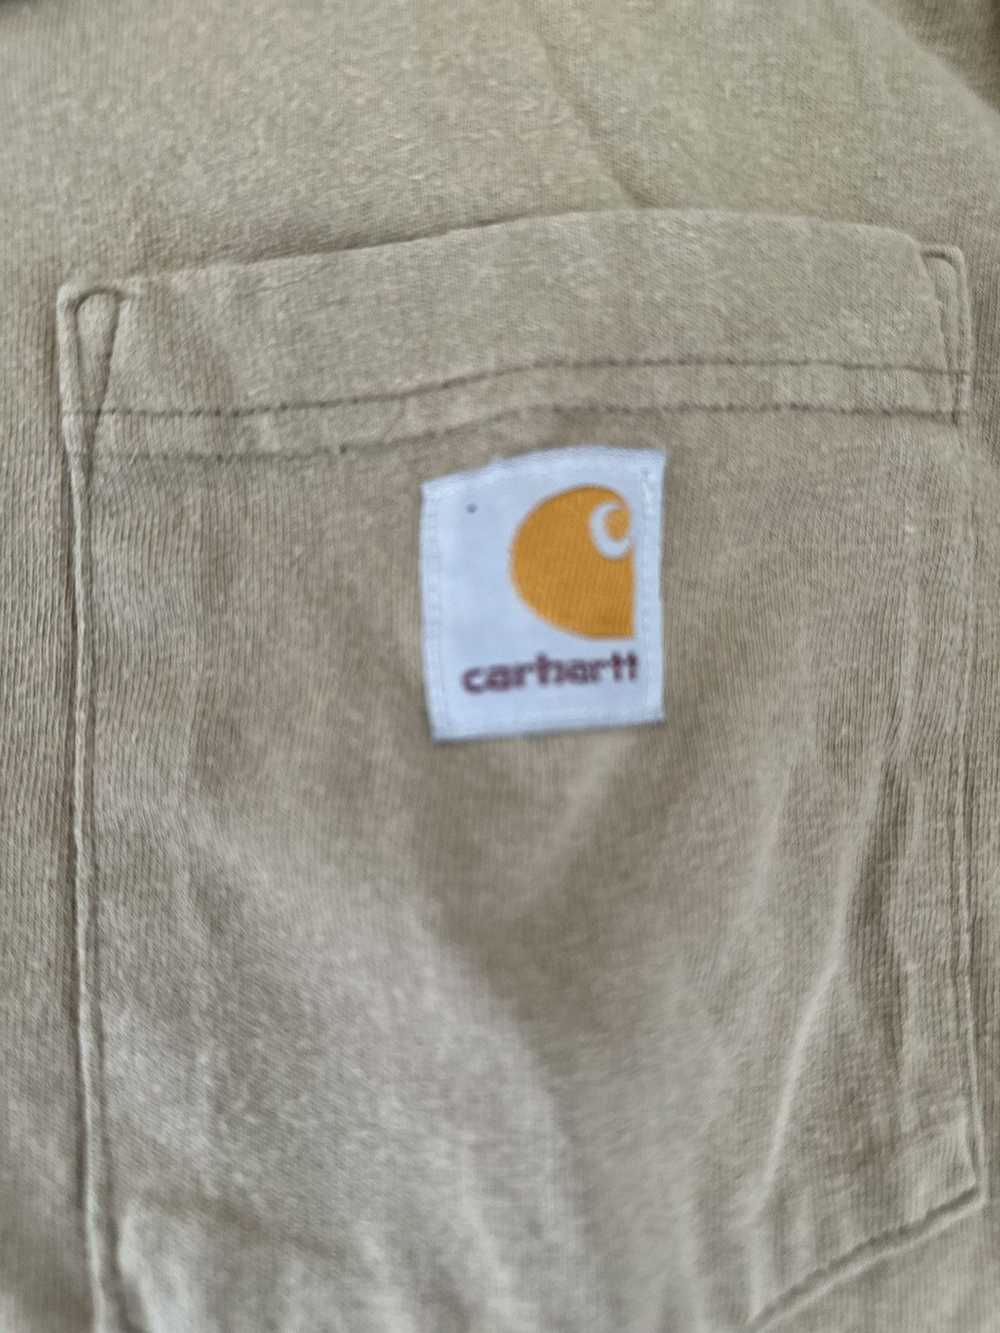 Carhartt Carhartt Pocket Tee - image 2